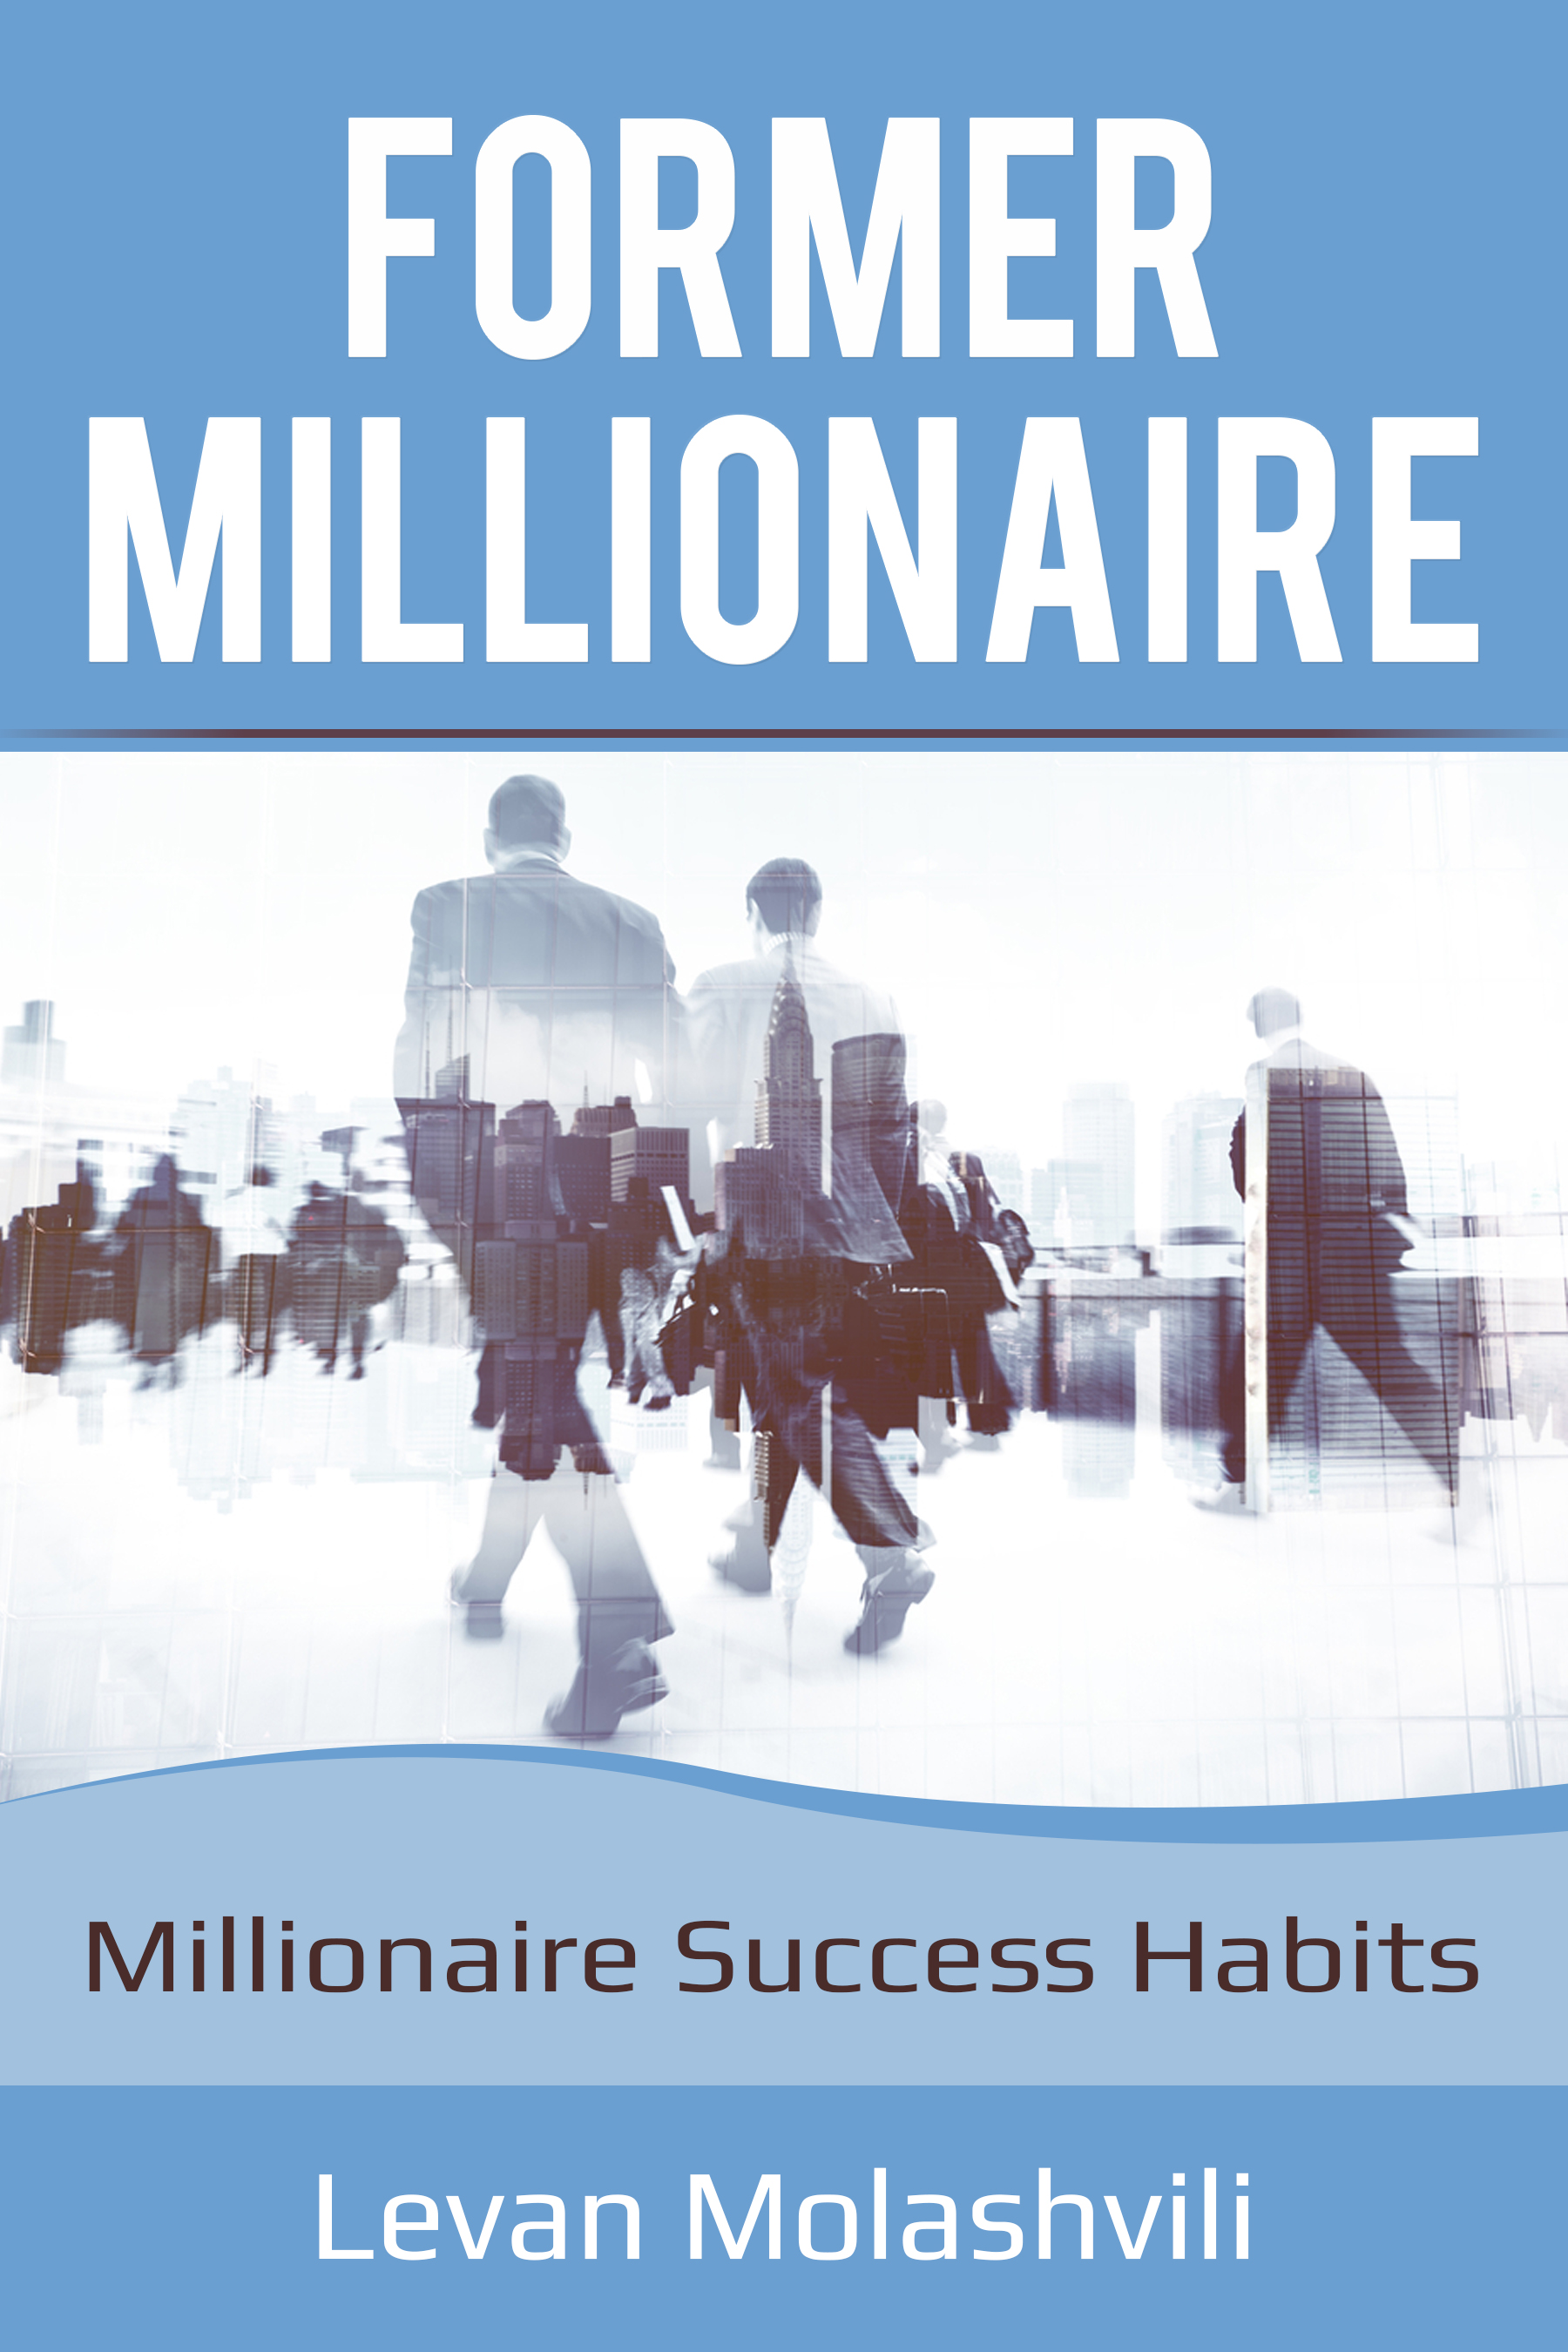 FREE: Millionaires success : Habits for future Millionaires by Levan Molashvili